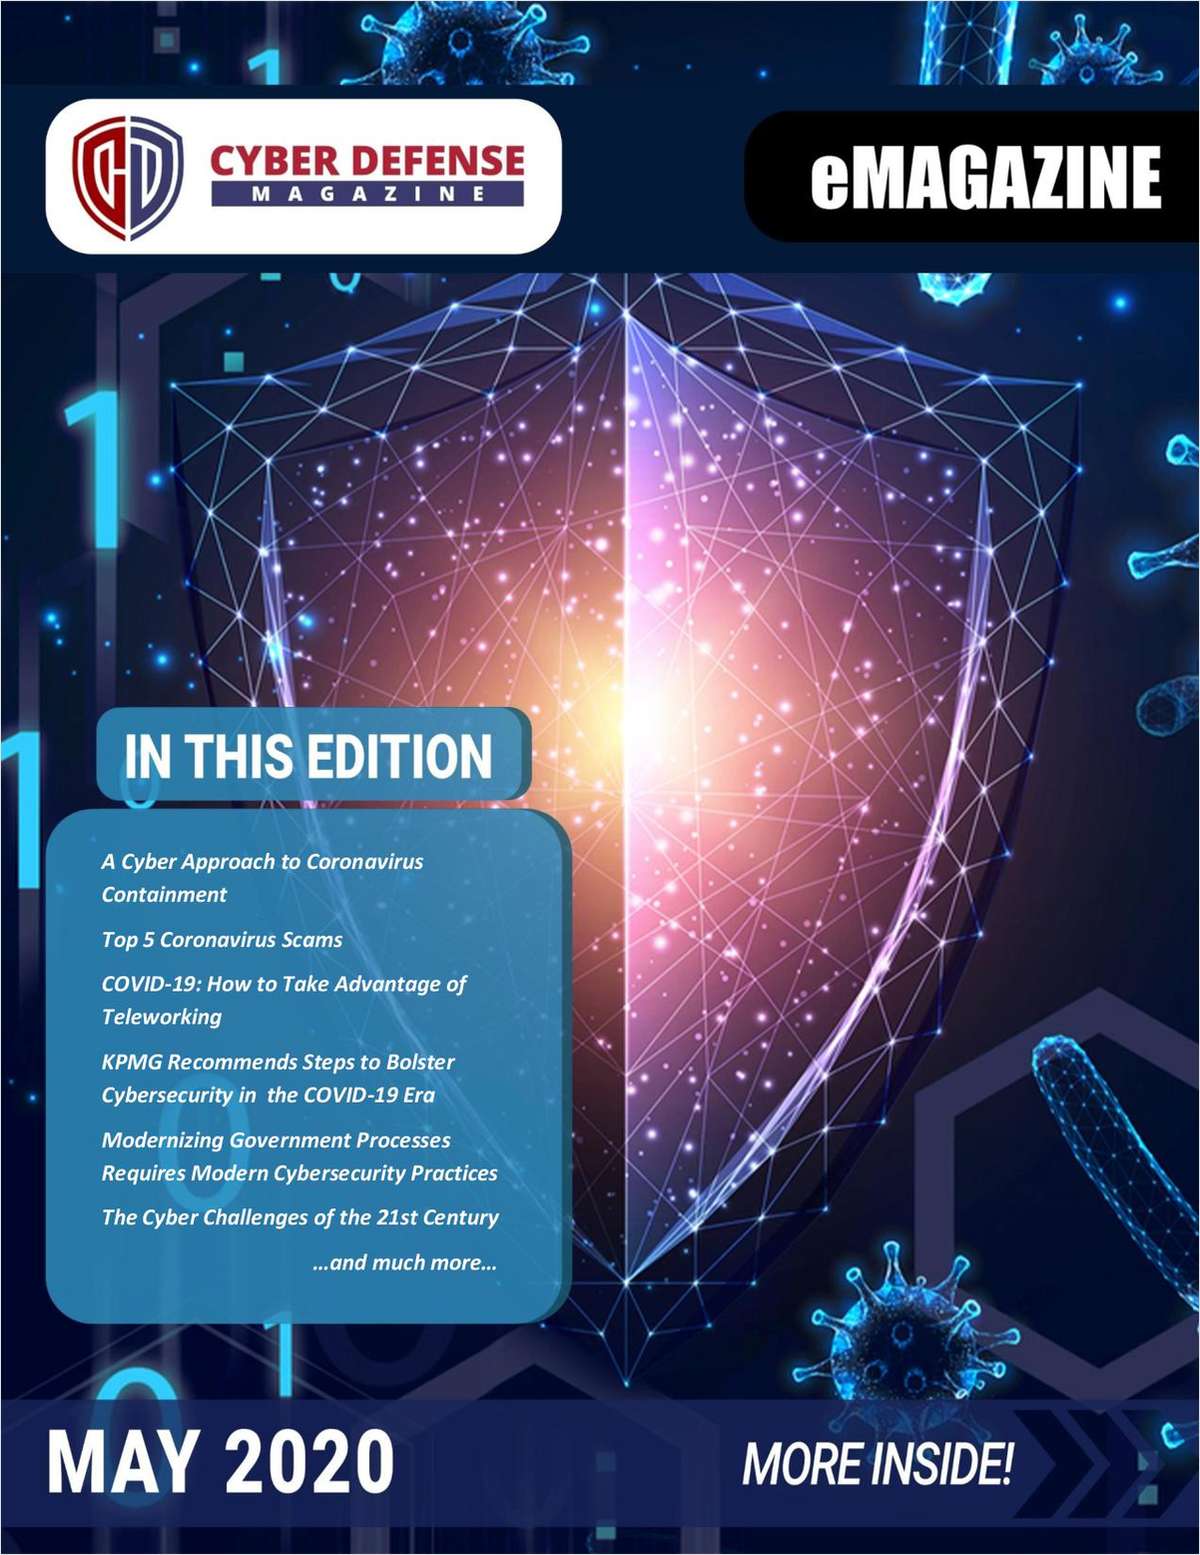 Cyber Defense Magazine May 2020 Edition